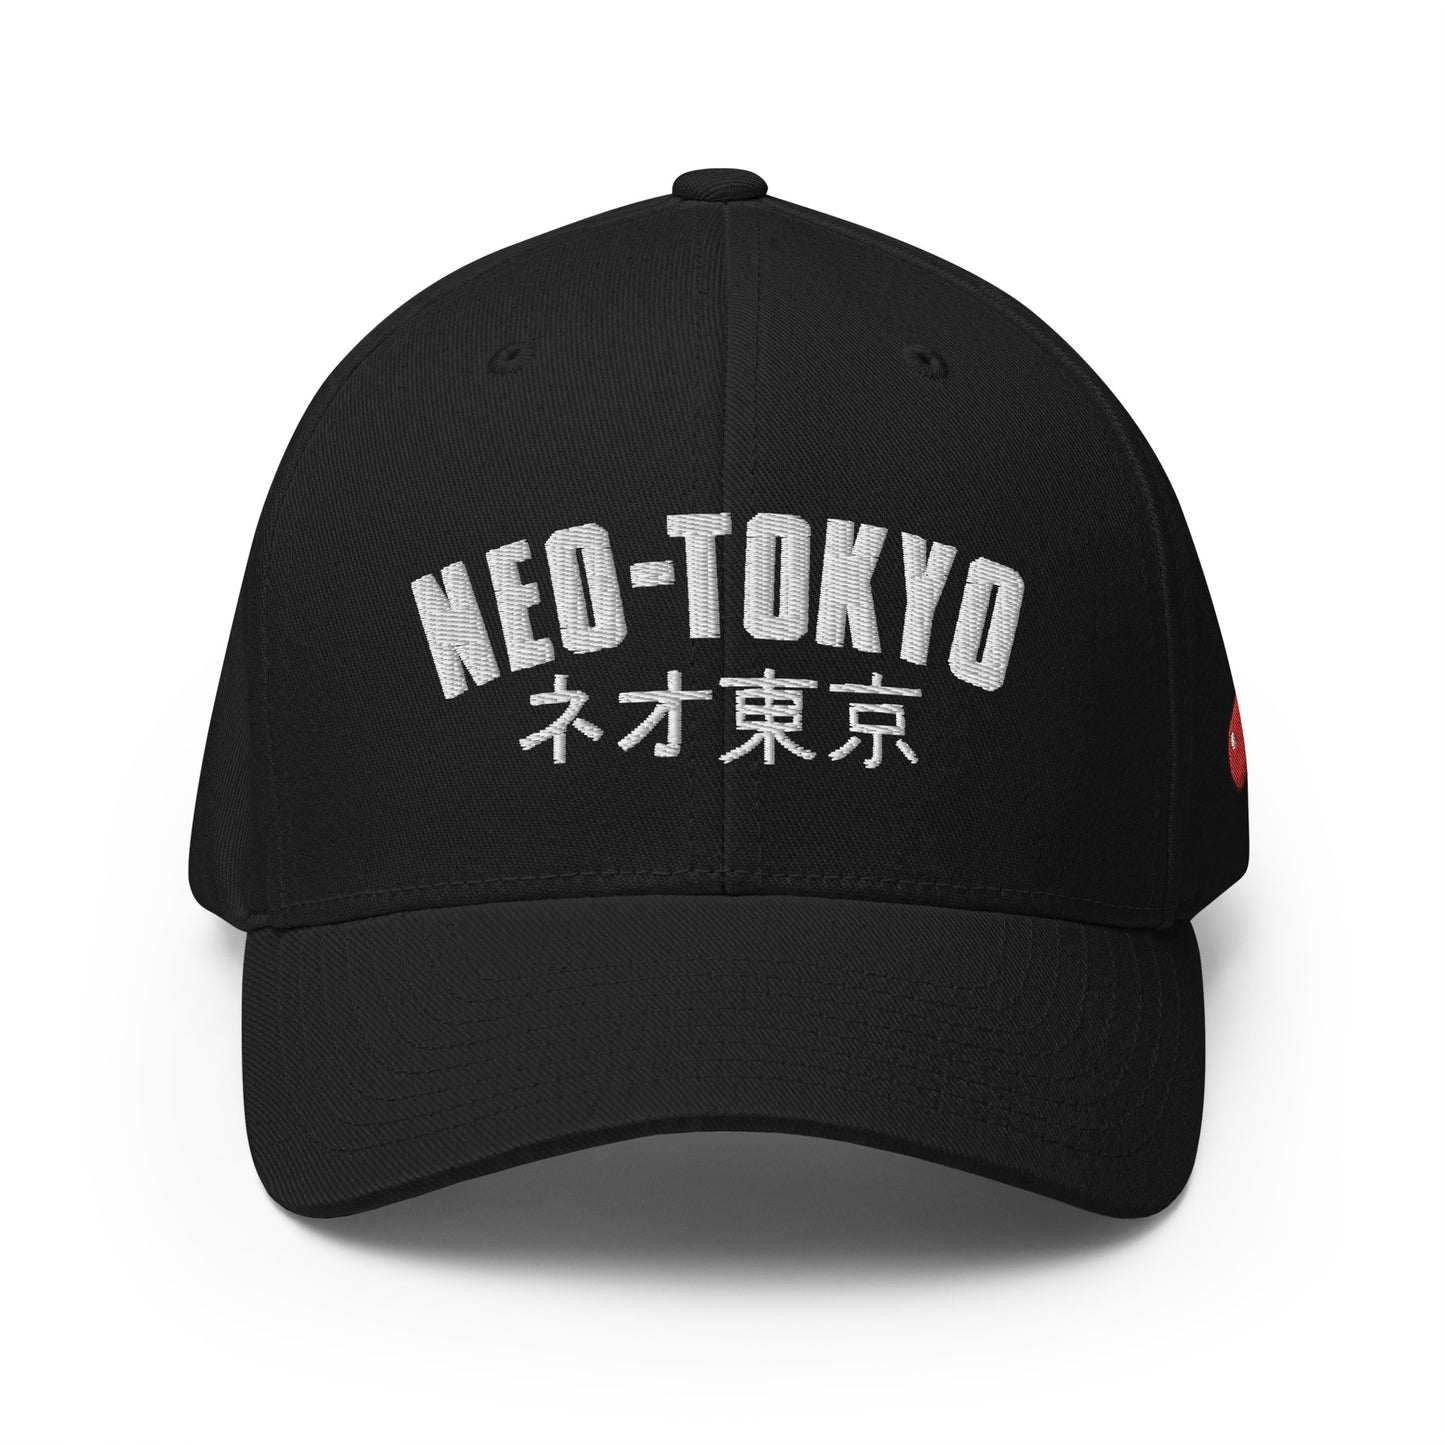 NEO-TOKYO Pride flexfit hat